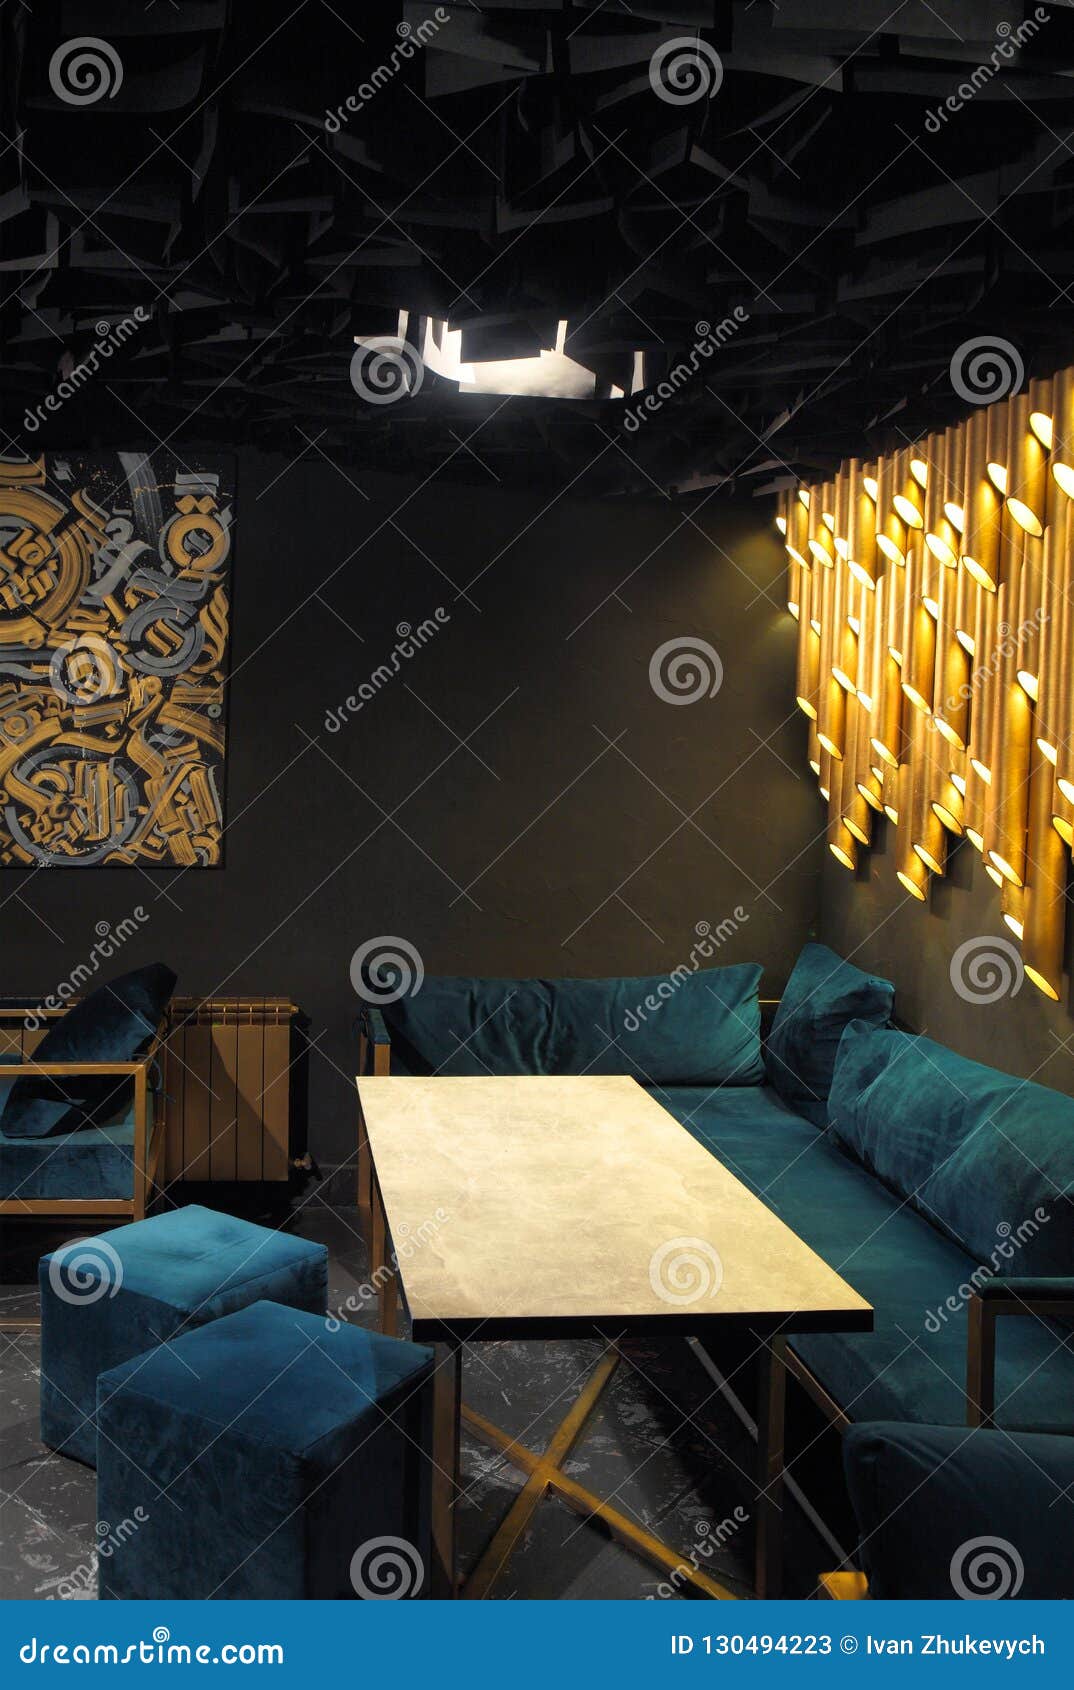 Modern Lounge Bar InteriorDark ToneDark Cyan Sofa And ChairsGolden Laterns In Form Of Tubes Stock Image Image Of Caffeine